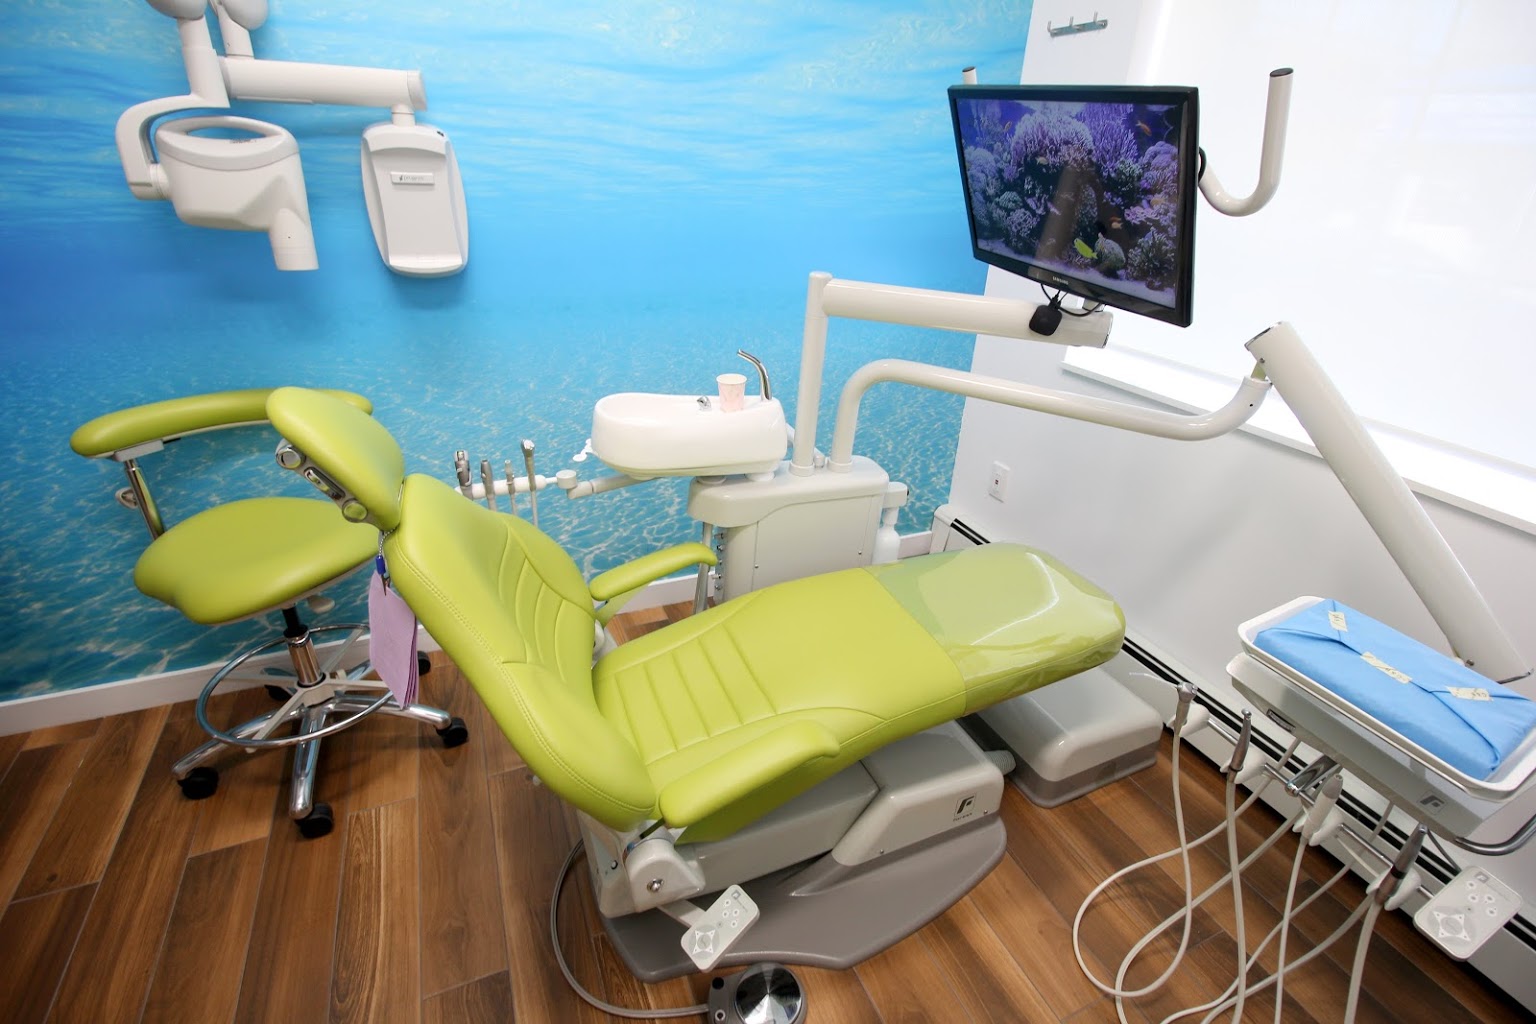 Vida Dental Spa in Whitestone, NY dentist chair exam room